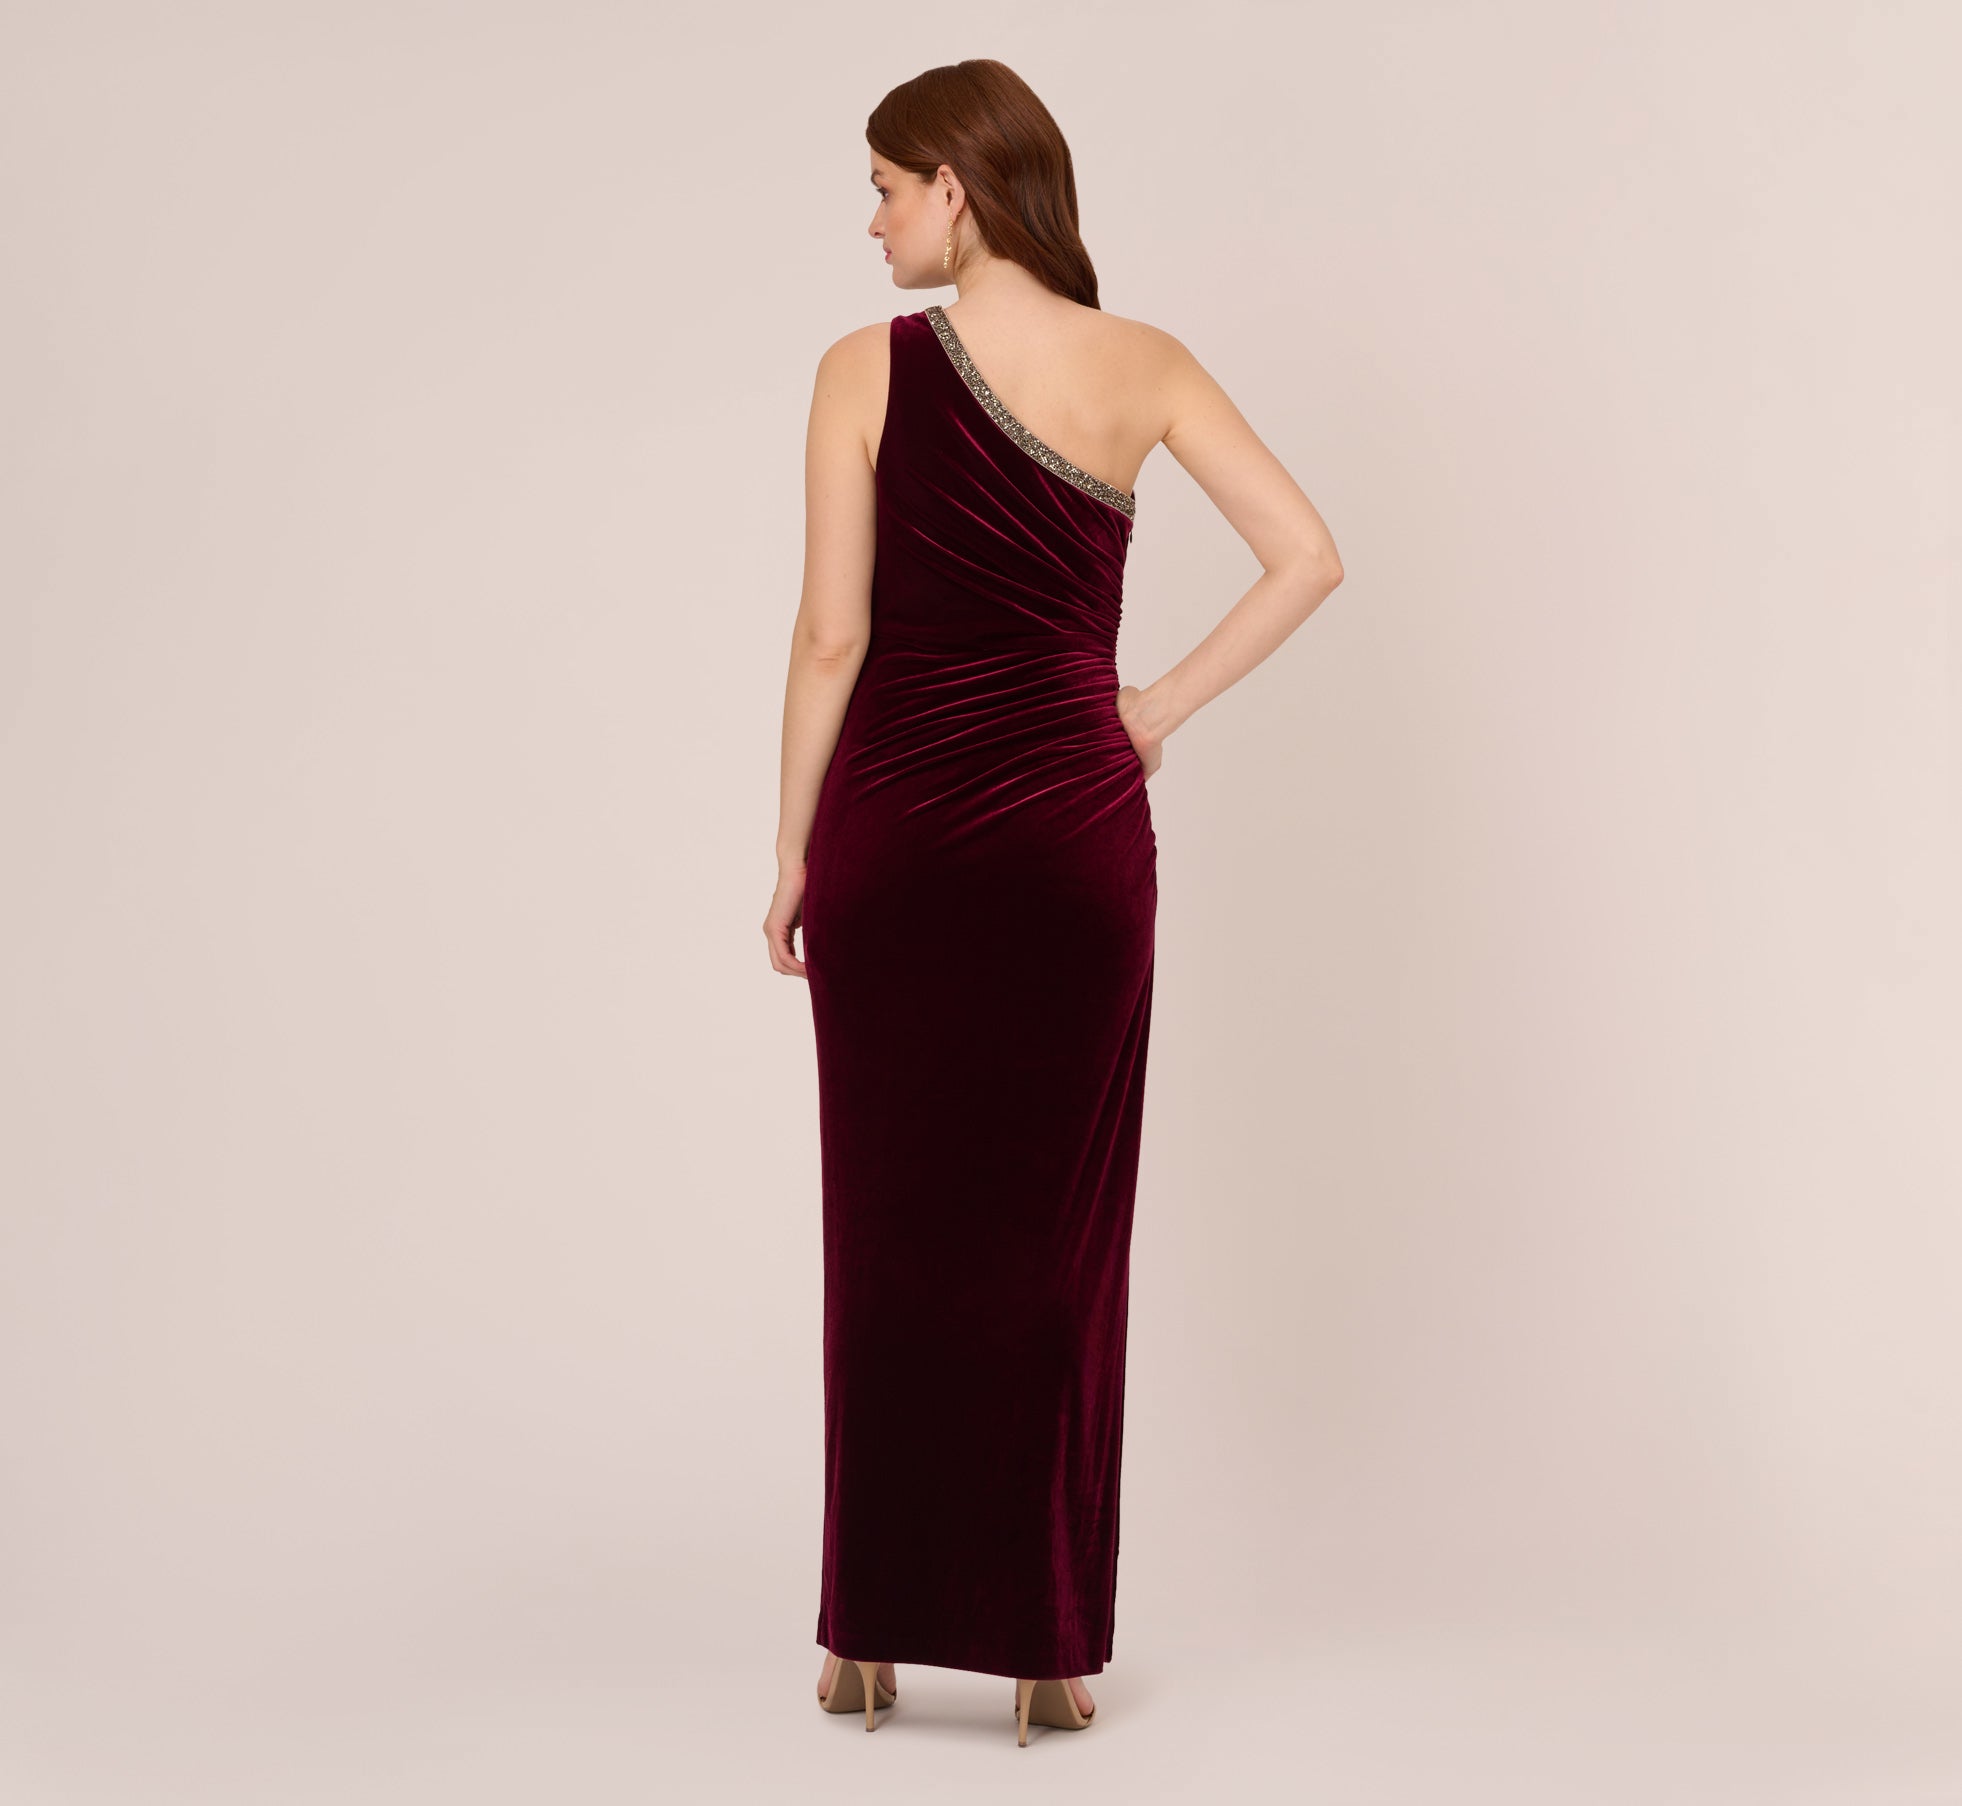 Velvet One Shoulder Gown With Beaded Neckline In Burgundy